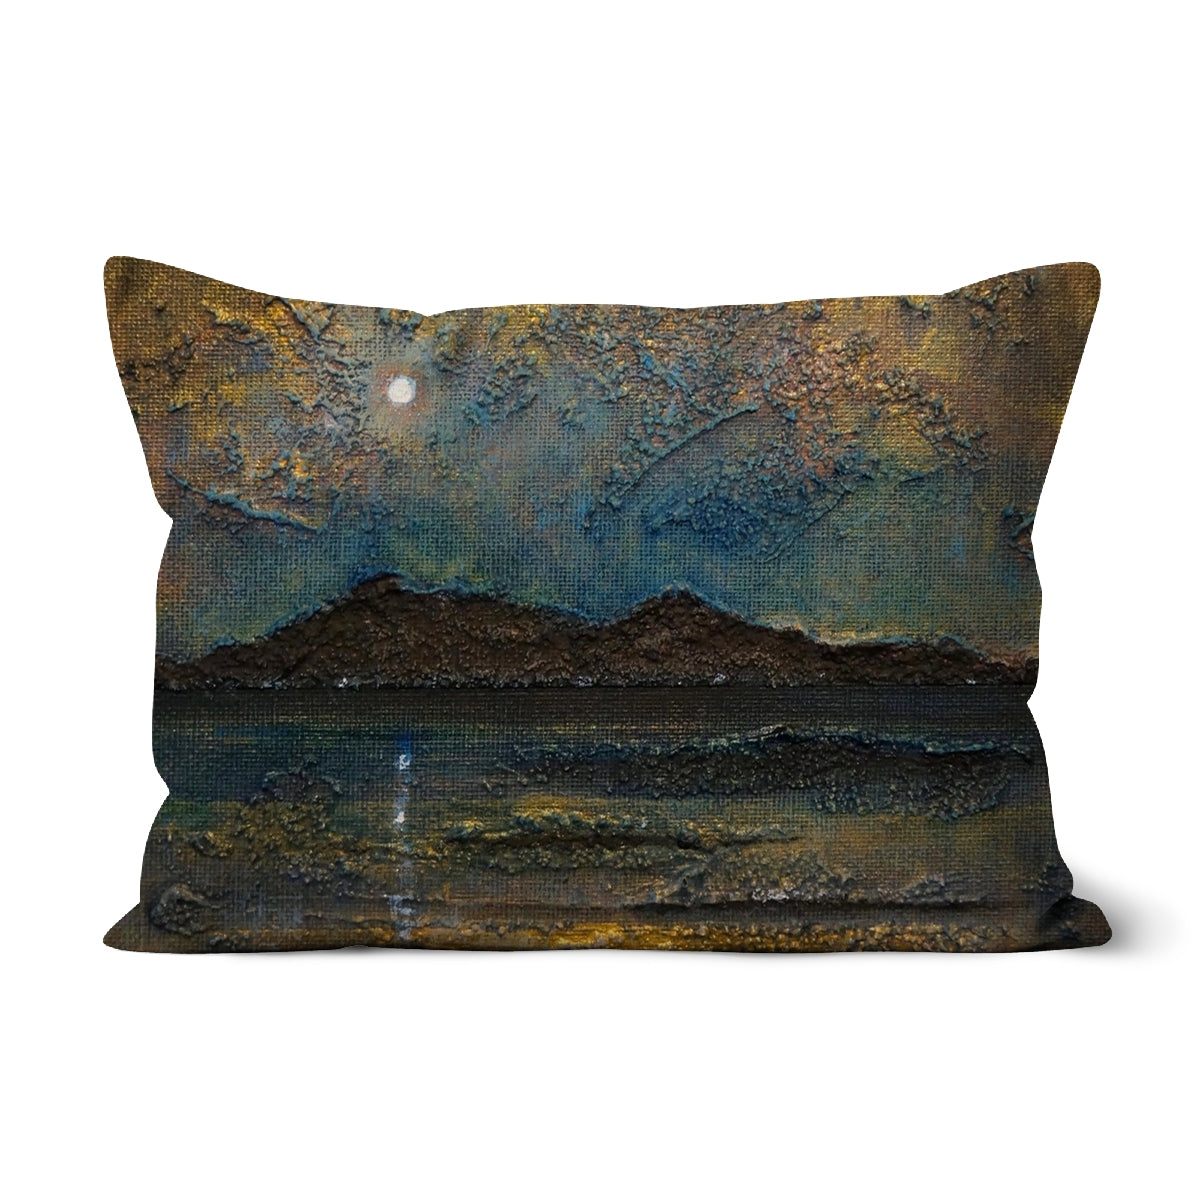 Arran Moonlight Art Gifts Cushion-Cushions-Arran Art Gallery-Linen-19"x13"-Paintings, Prints, Homeware, Art Gifts From Scotland By Scottish Artist Kevin Hunter